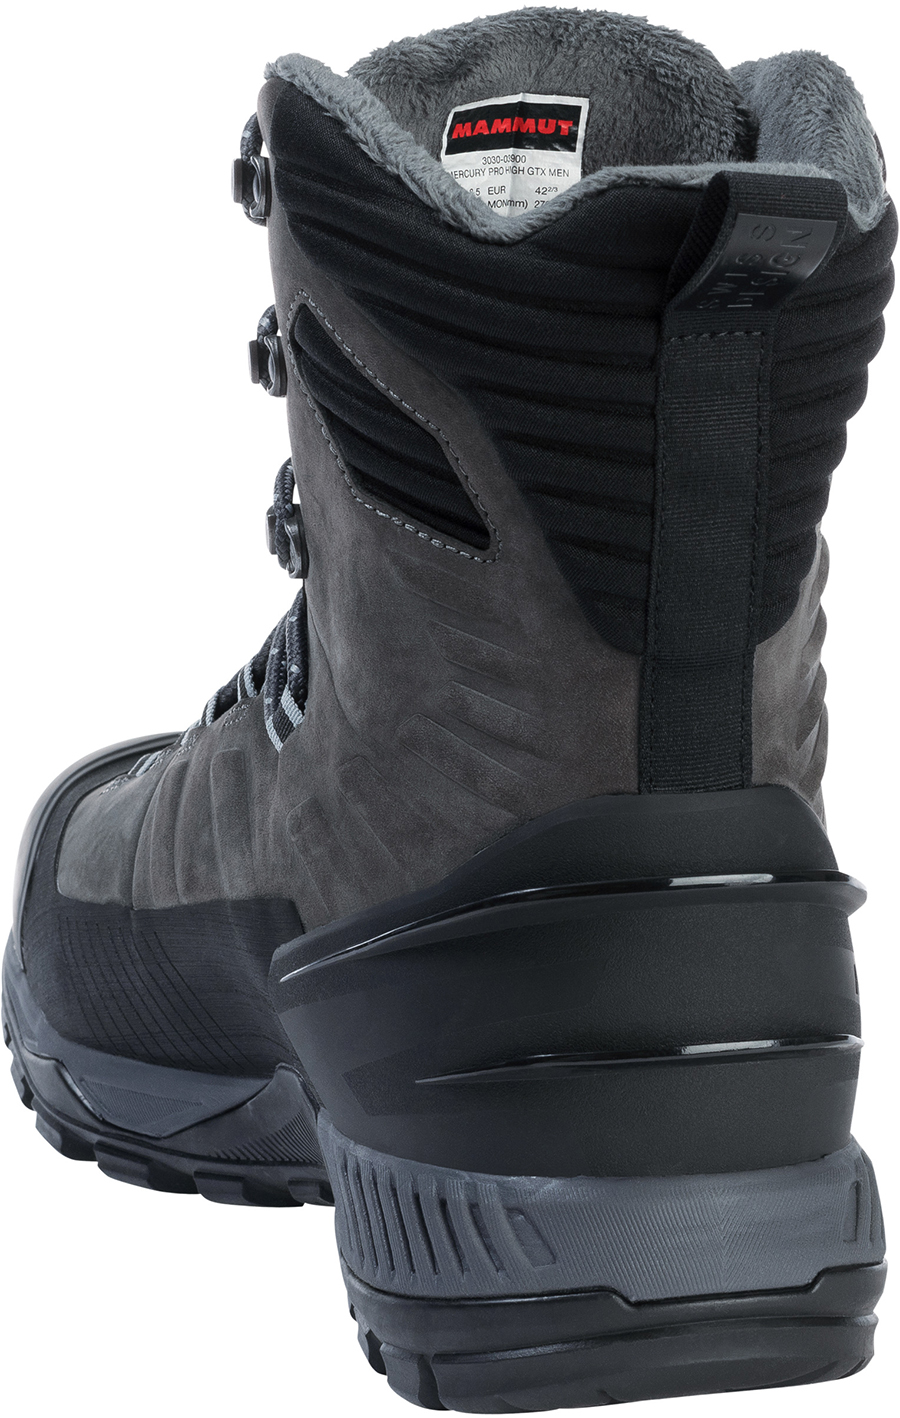 Mammut Mercury Pro High GTX Winter Hiking Boot